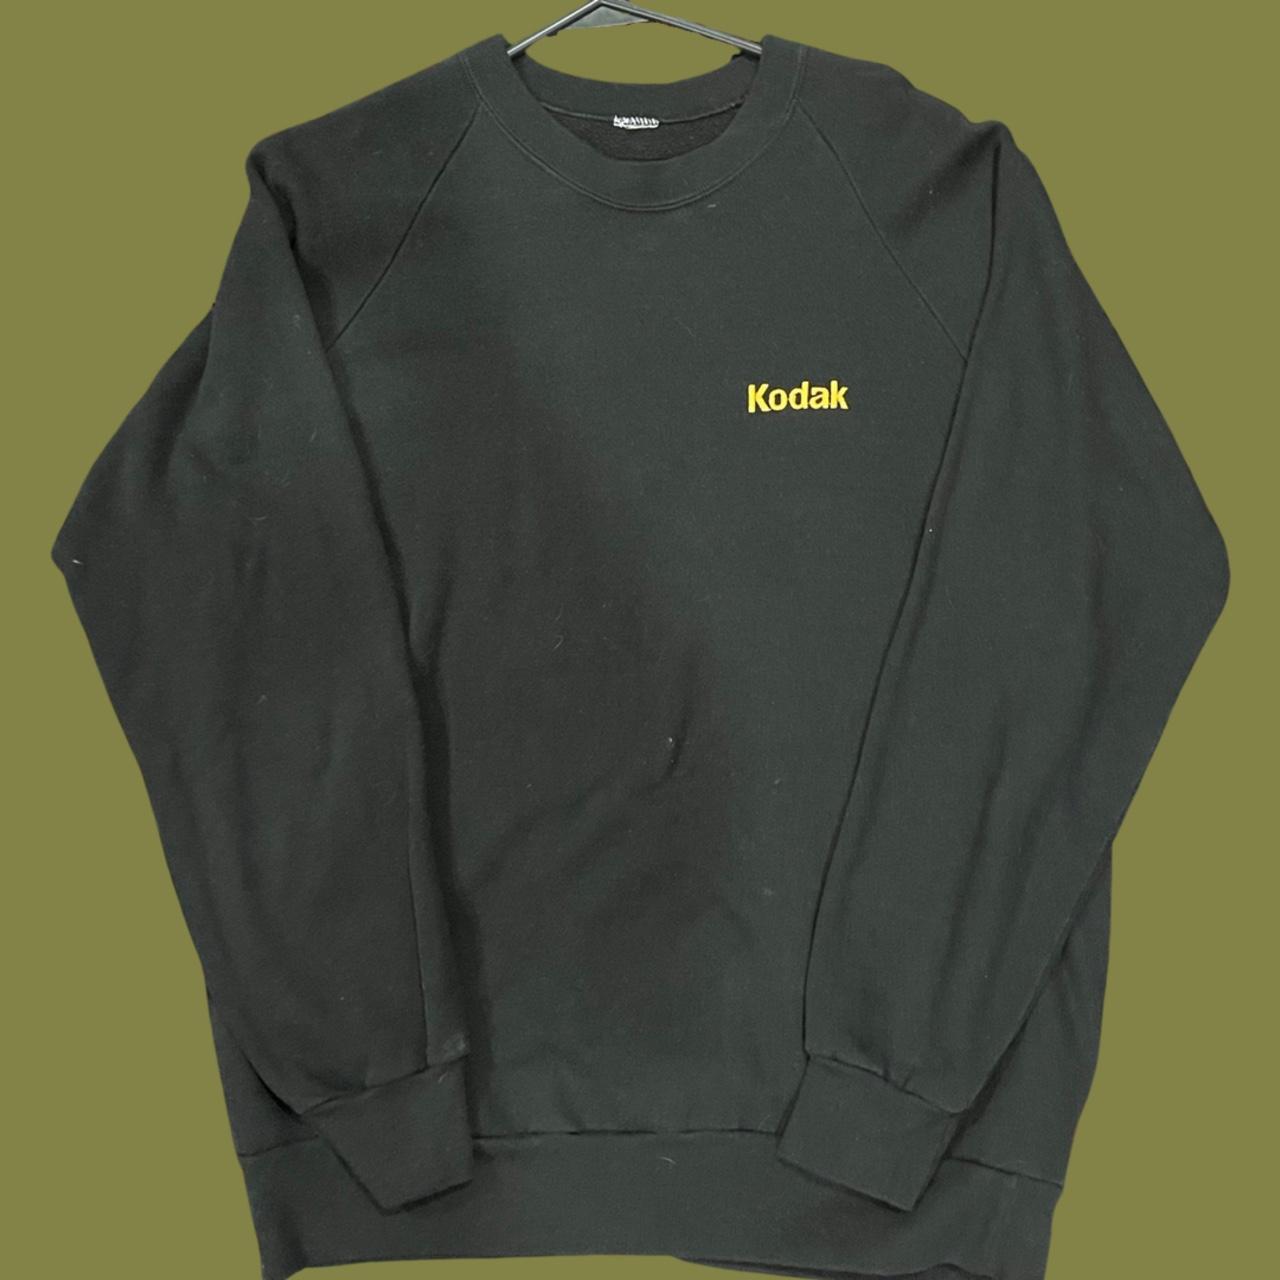 Kodak Men's Black Sweatshirt